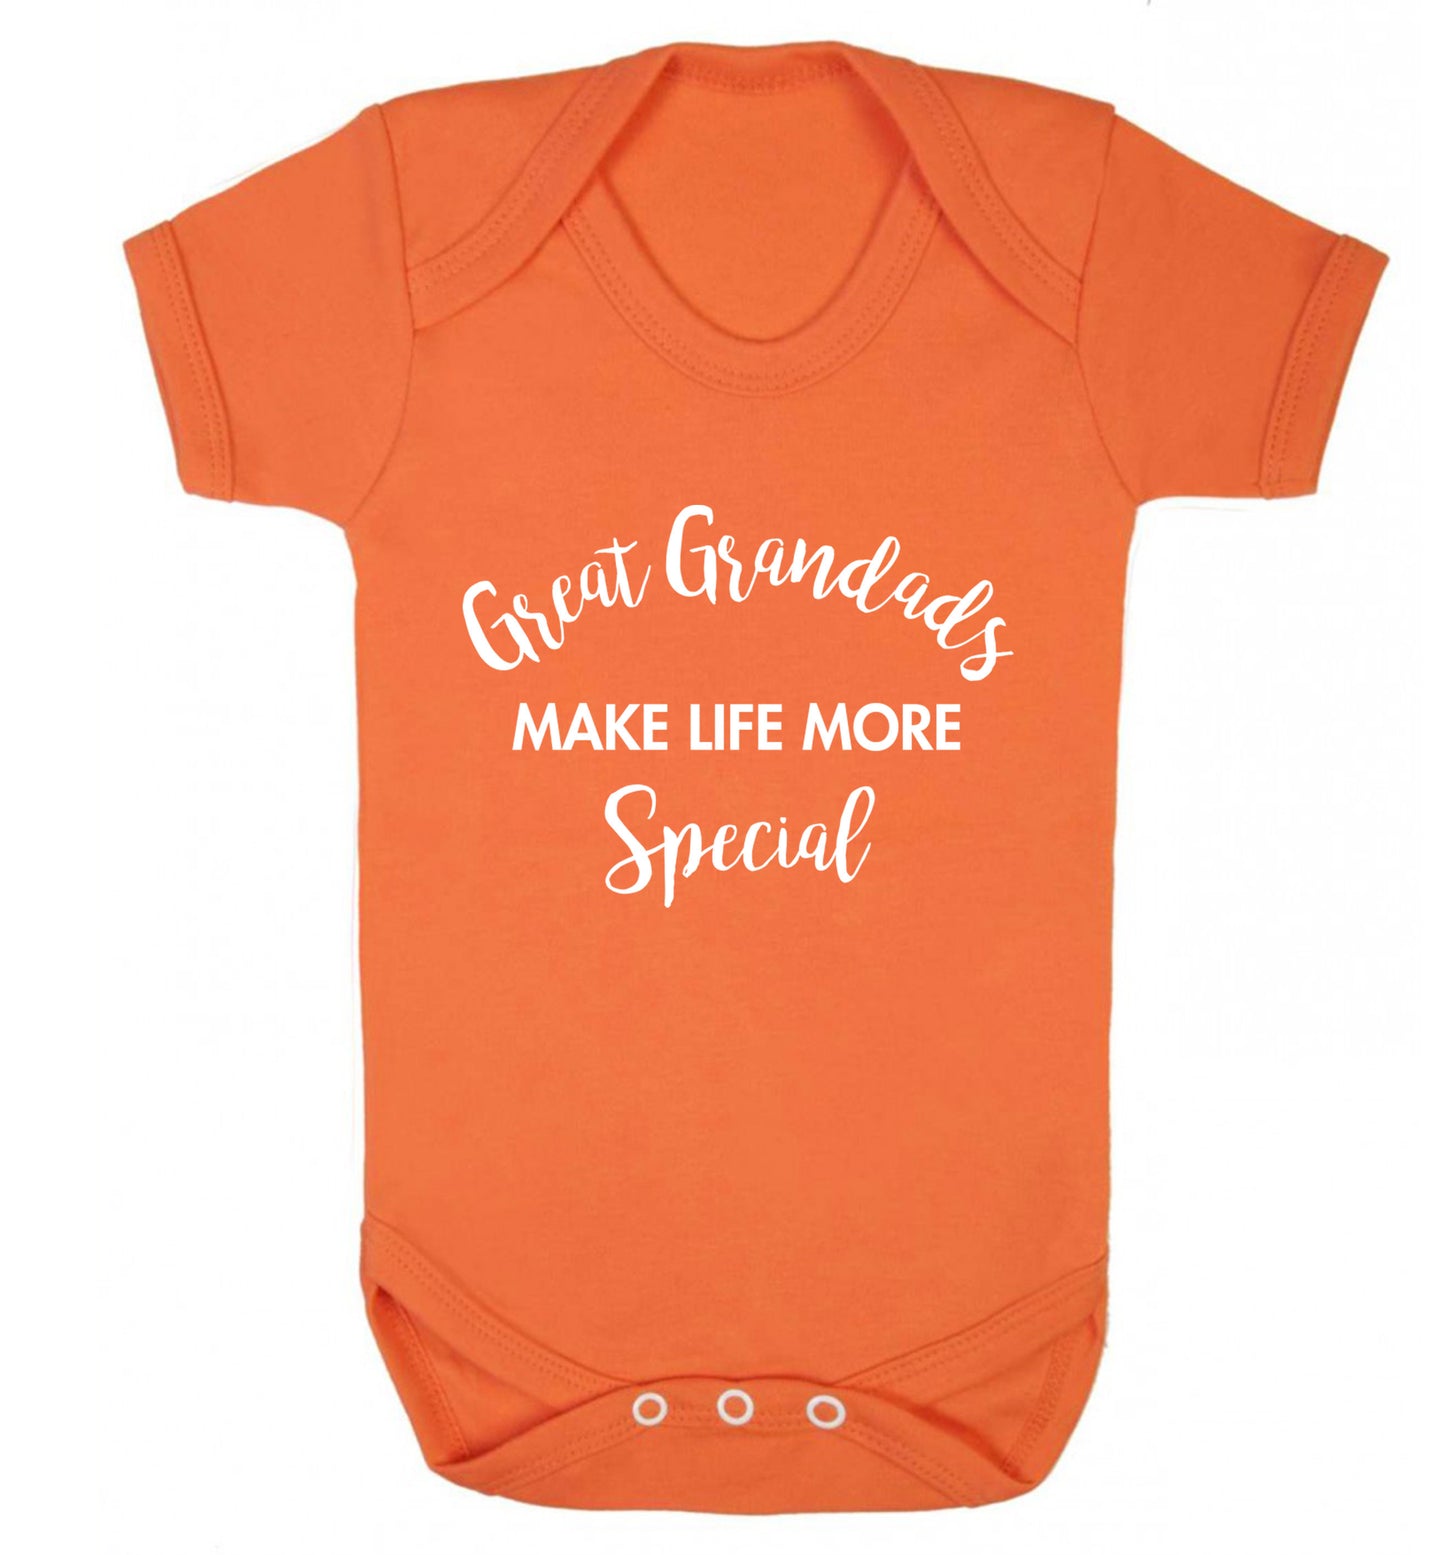 Great Grandads make life more special Baby Vest orange 18-24 months